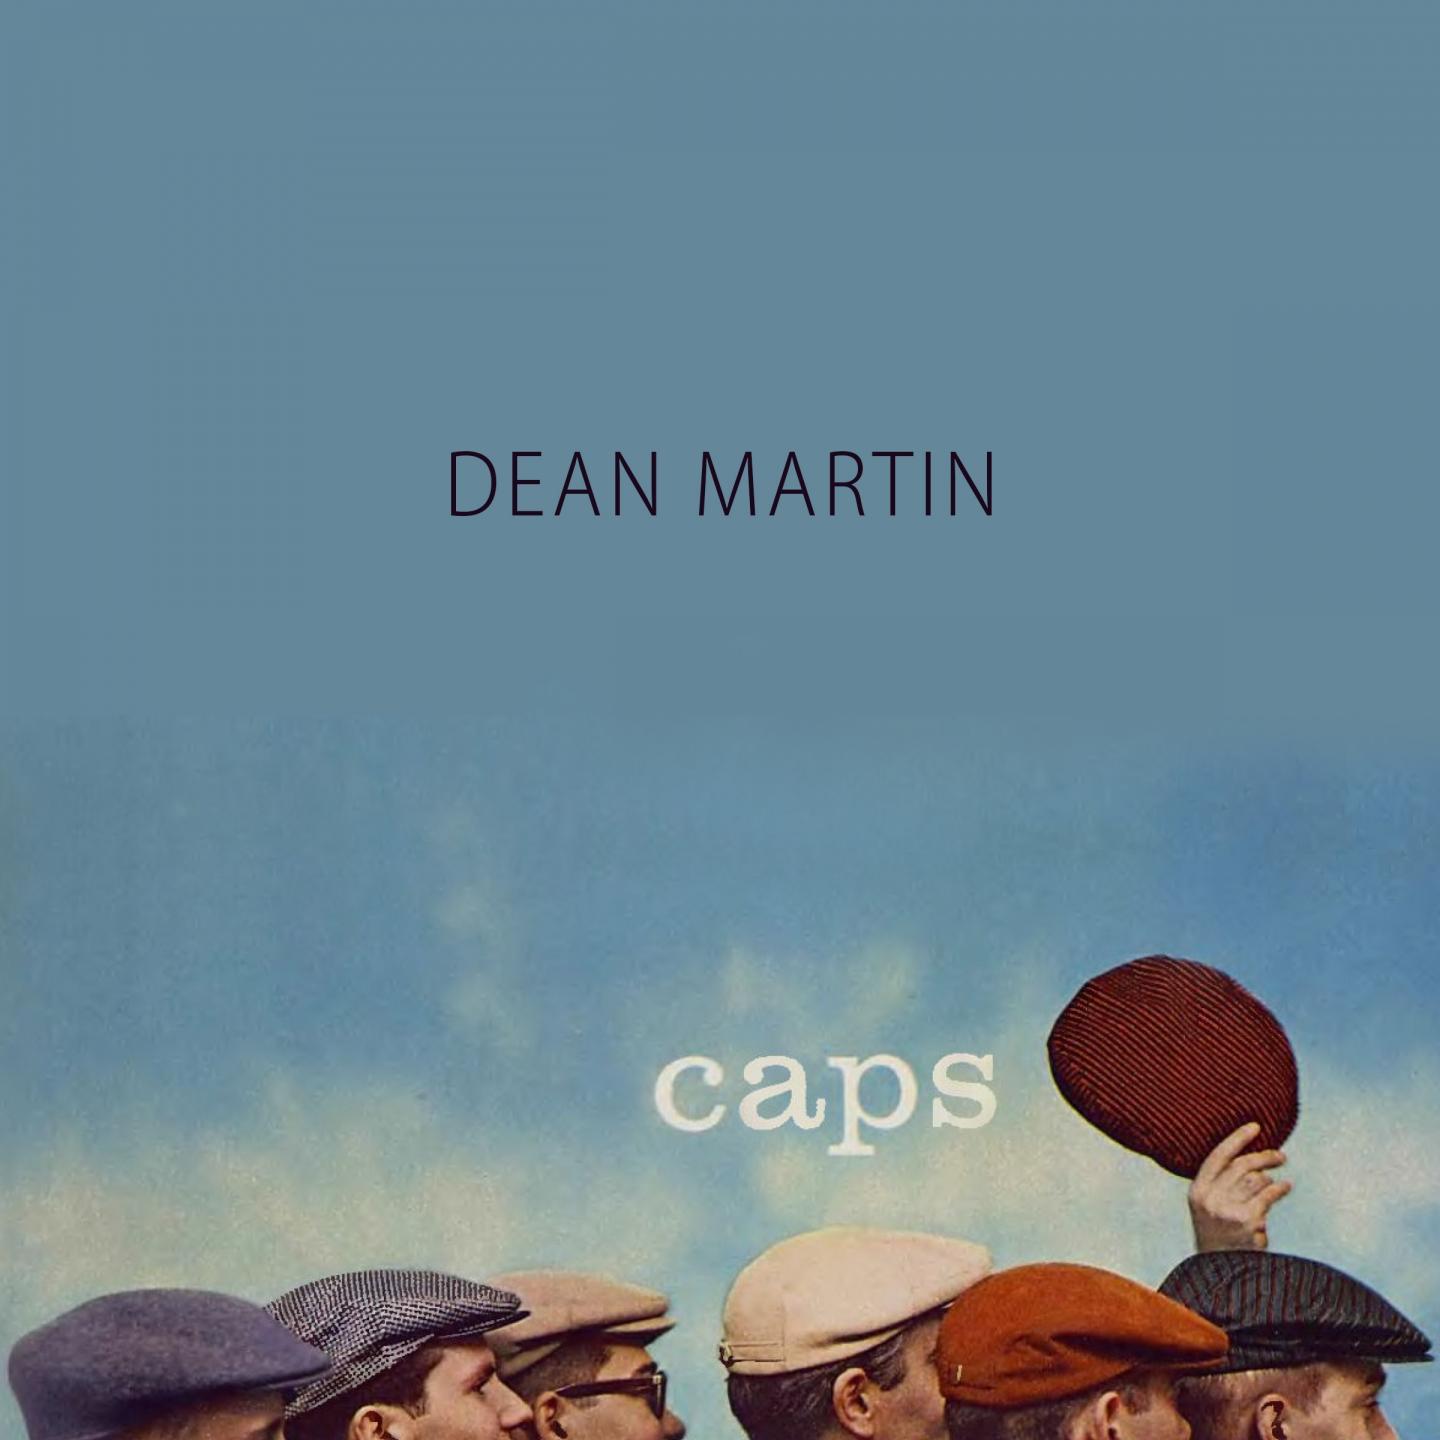 Carolina In The Morning歌词 歌手Gus Kahn / Dean Martin-专辑Caps-单曲《Carolina In The Morning》LRC歌词下载